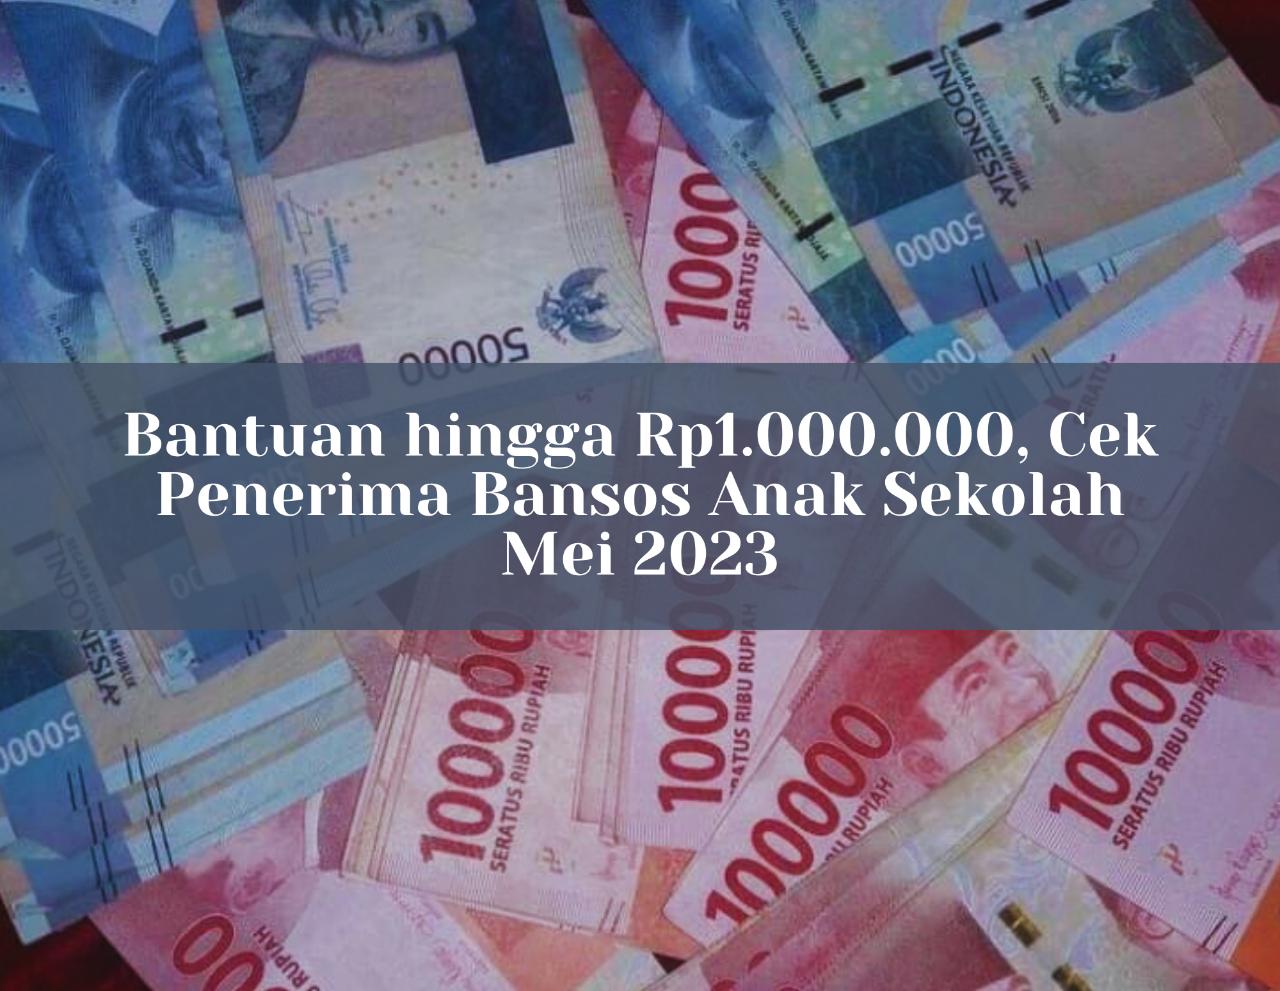 Bantuan hingga Rp1.000.000, Cek Penerima Bansos Anak Sekolah Mei 2023 Lewat Link pip.kemdikbud.go.id!